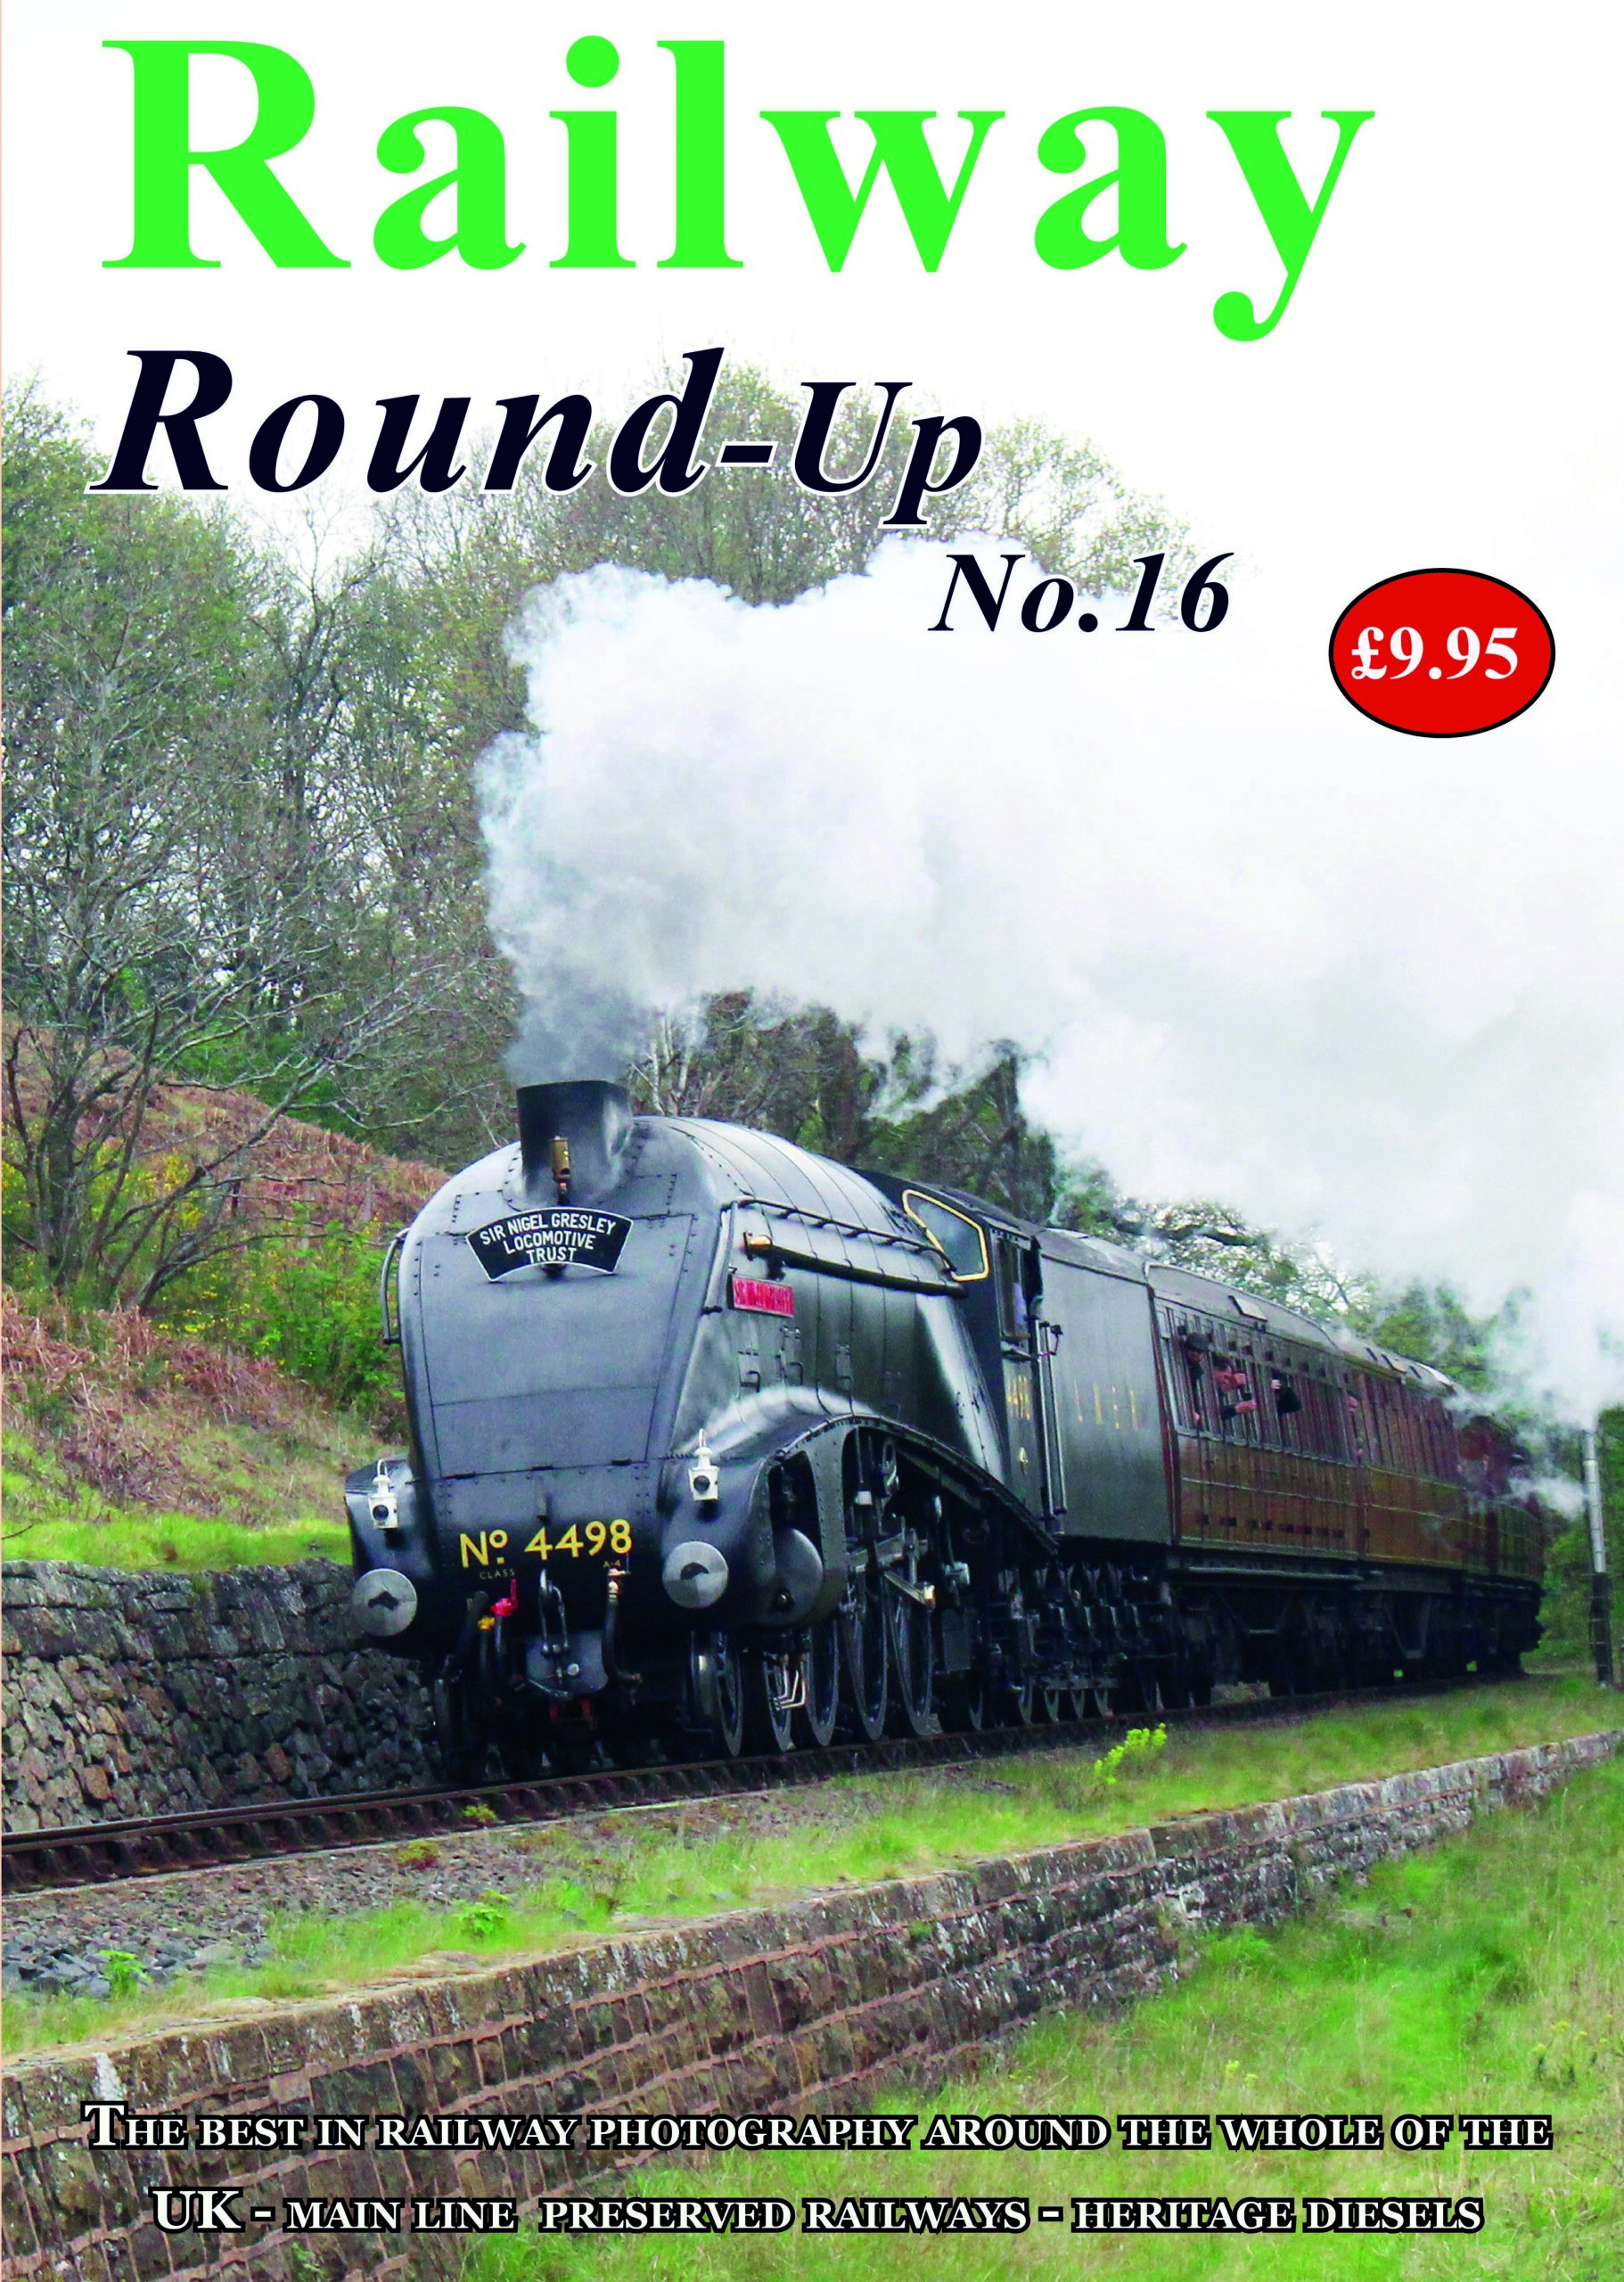 Railway Round-Up No.16